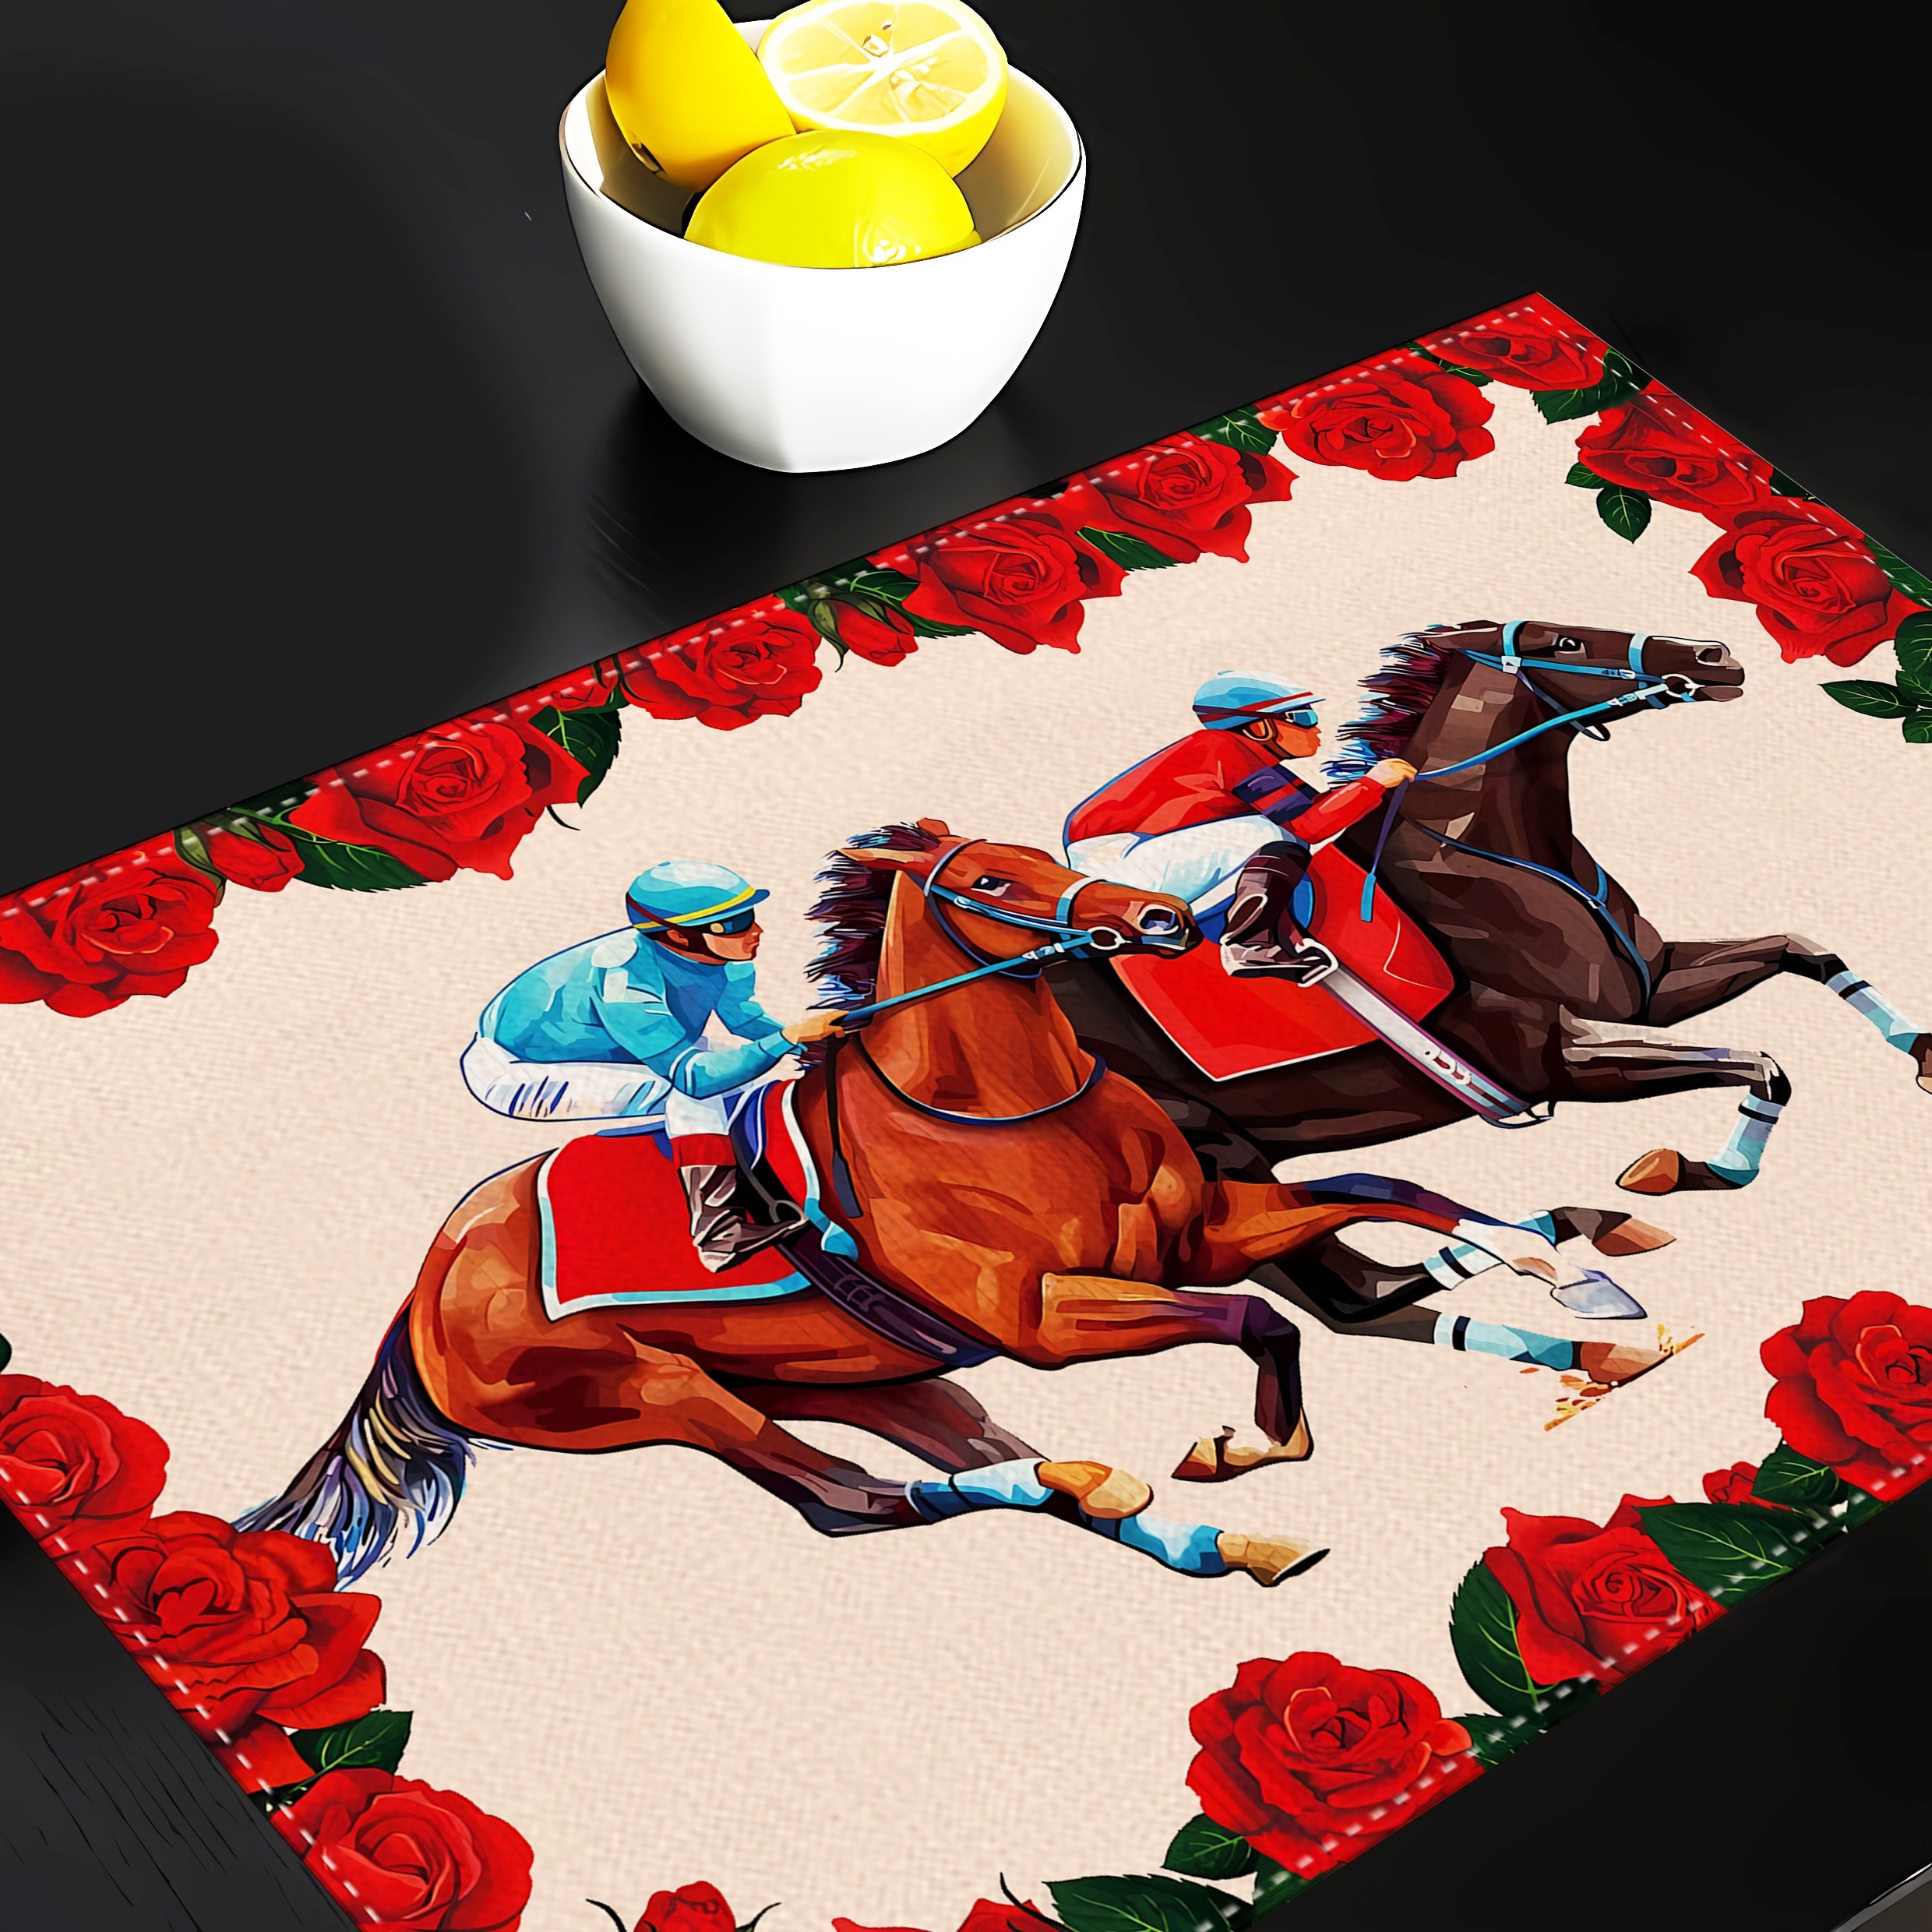 Equestrian Table Settings